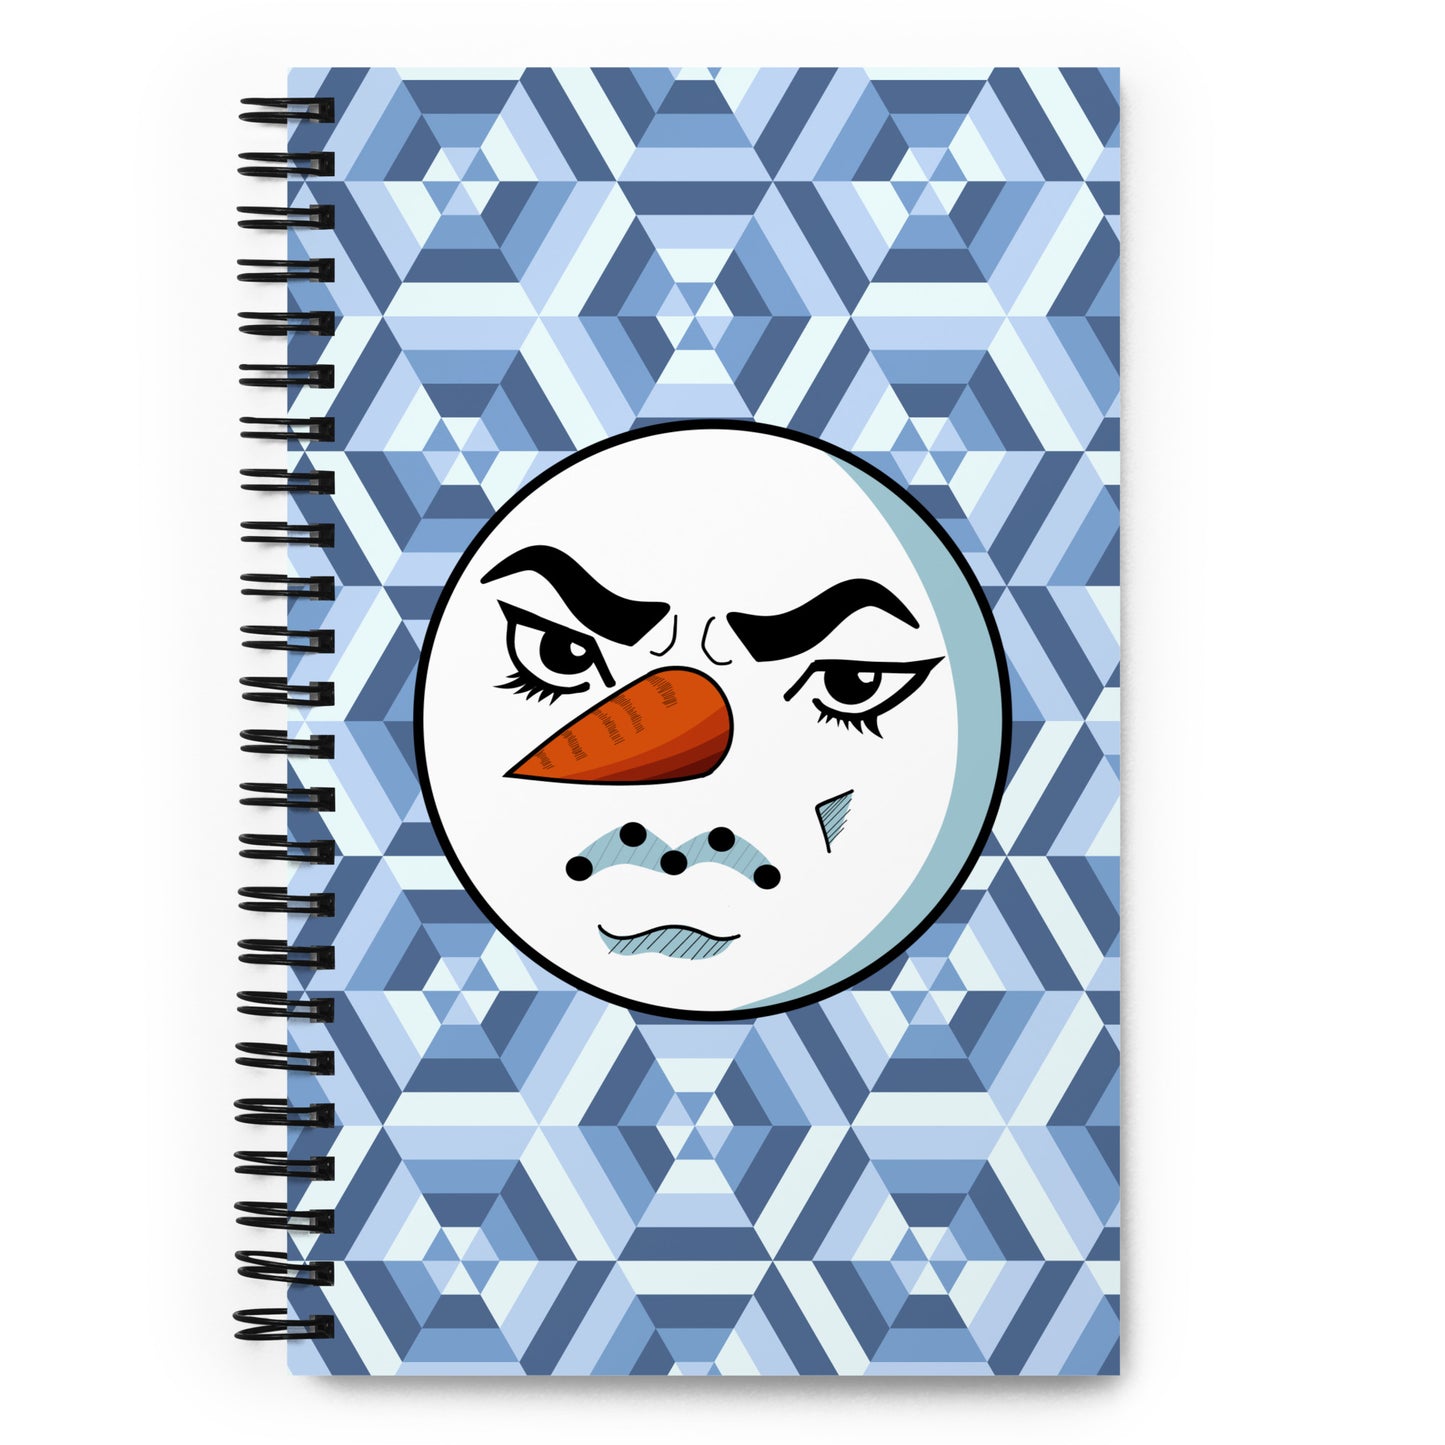 Snowman Dio Face Spiral notebook